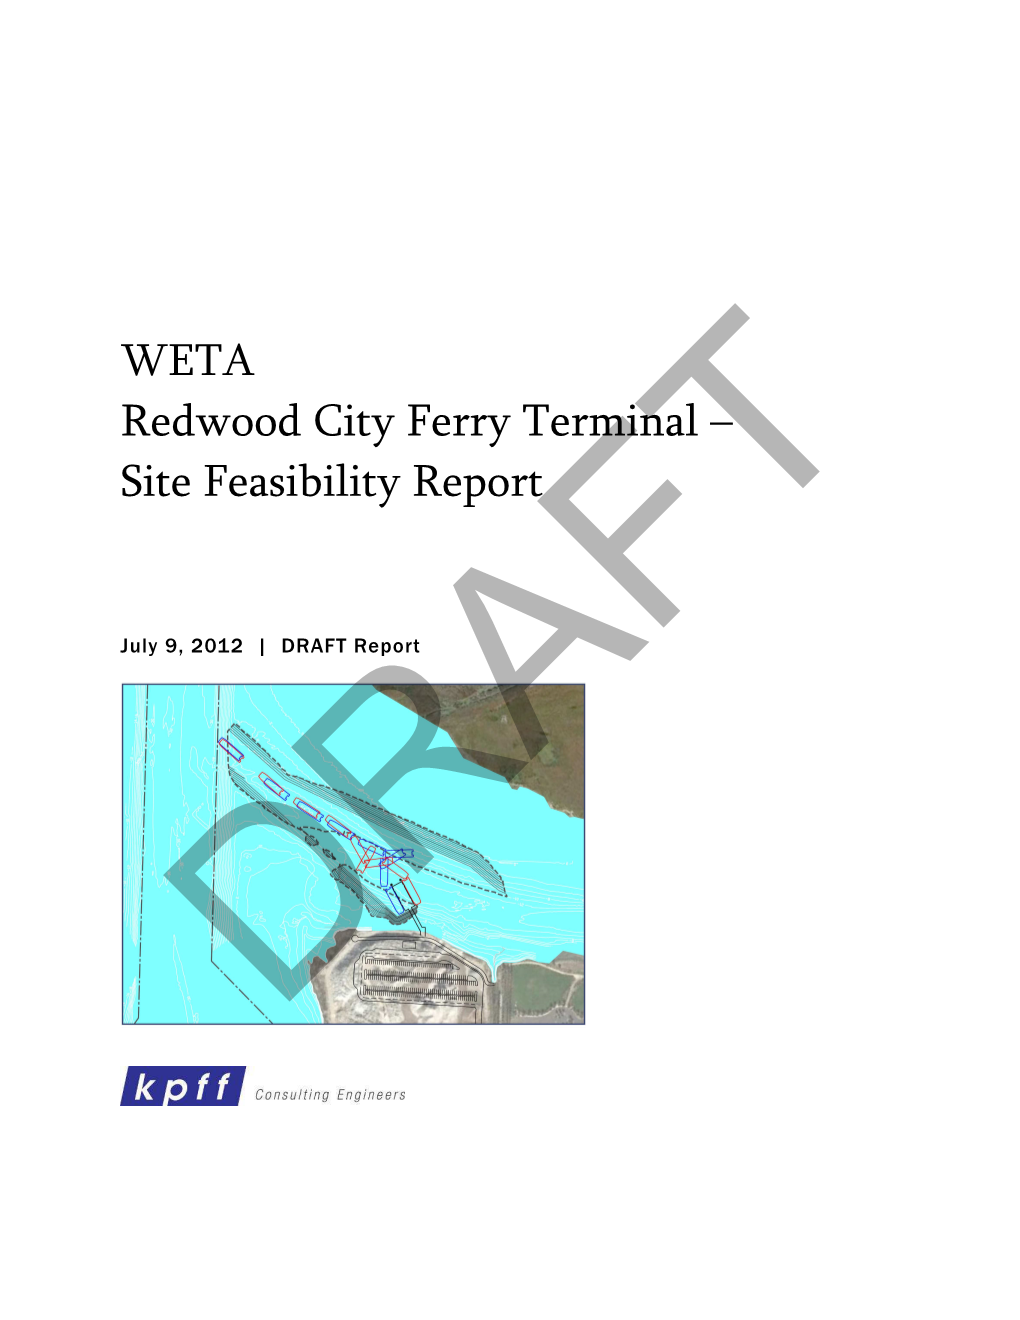 Draft WETA Redwood City Ferry Site Assessment Report 2012-07-09